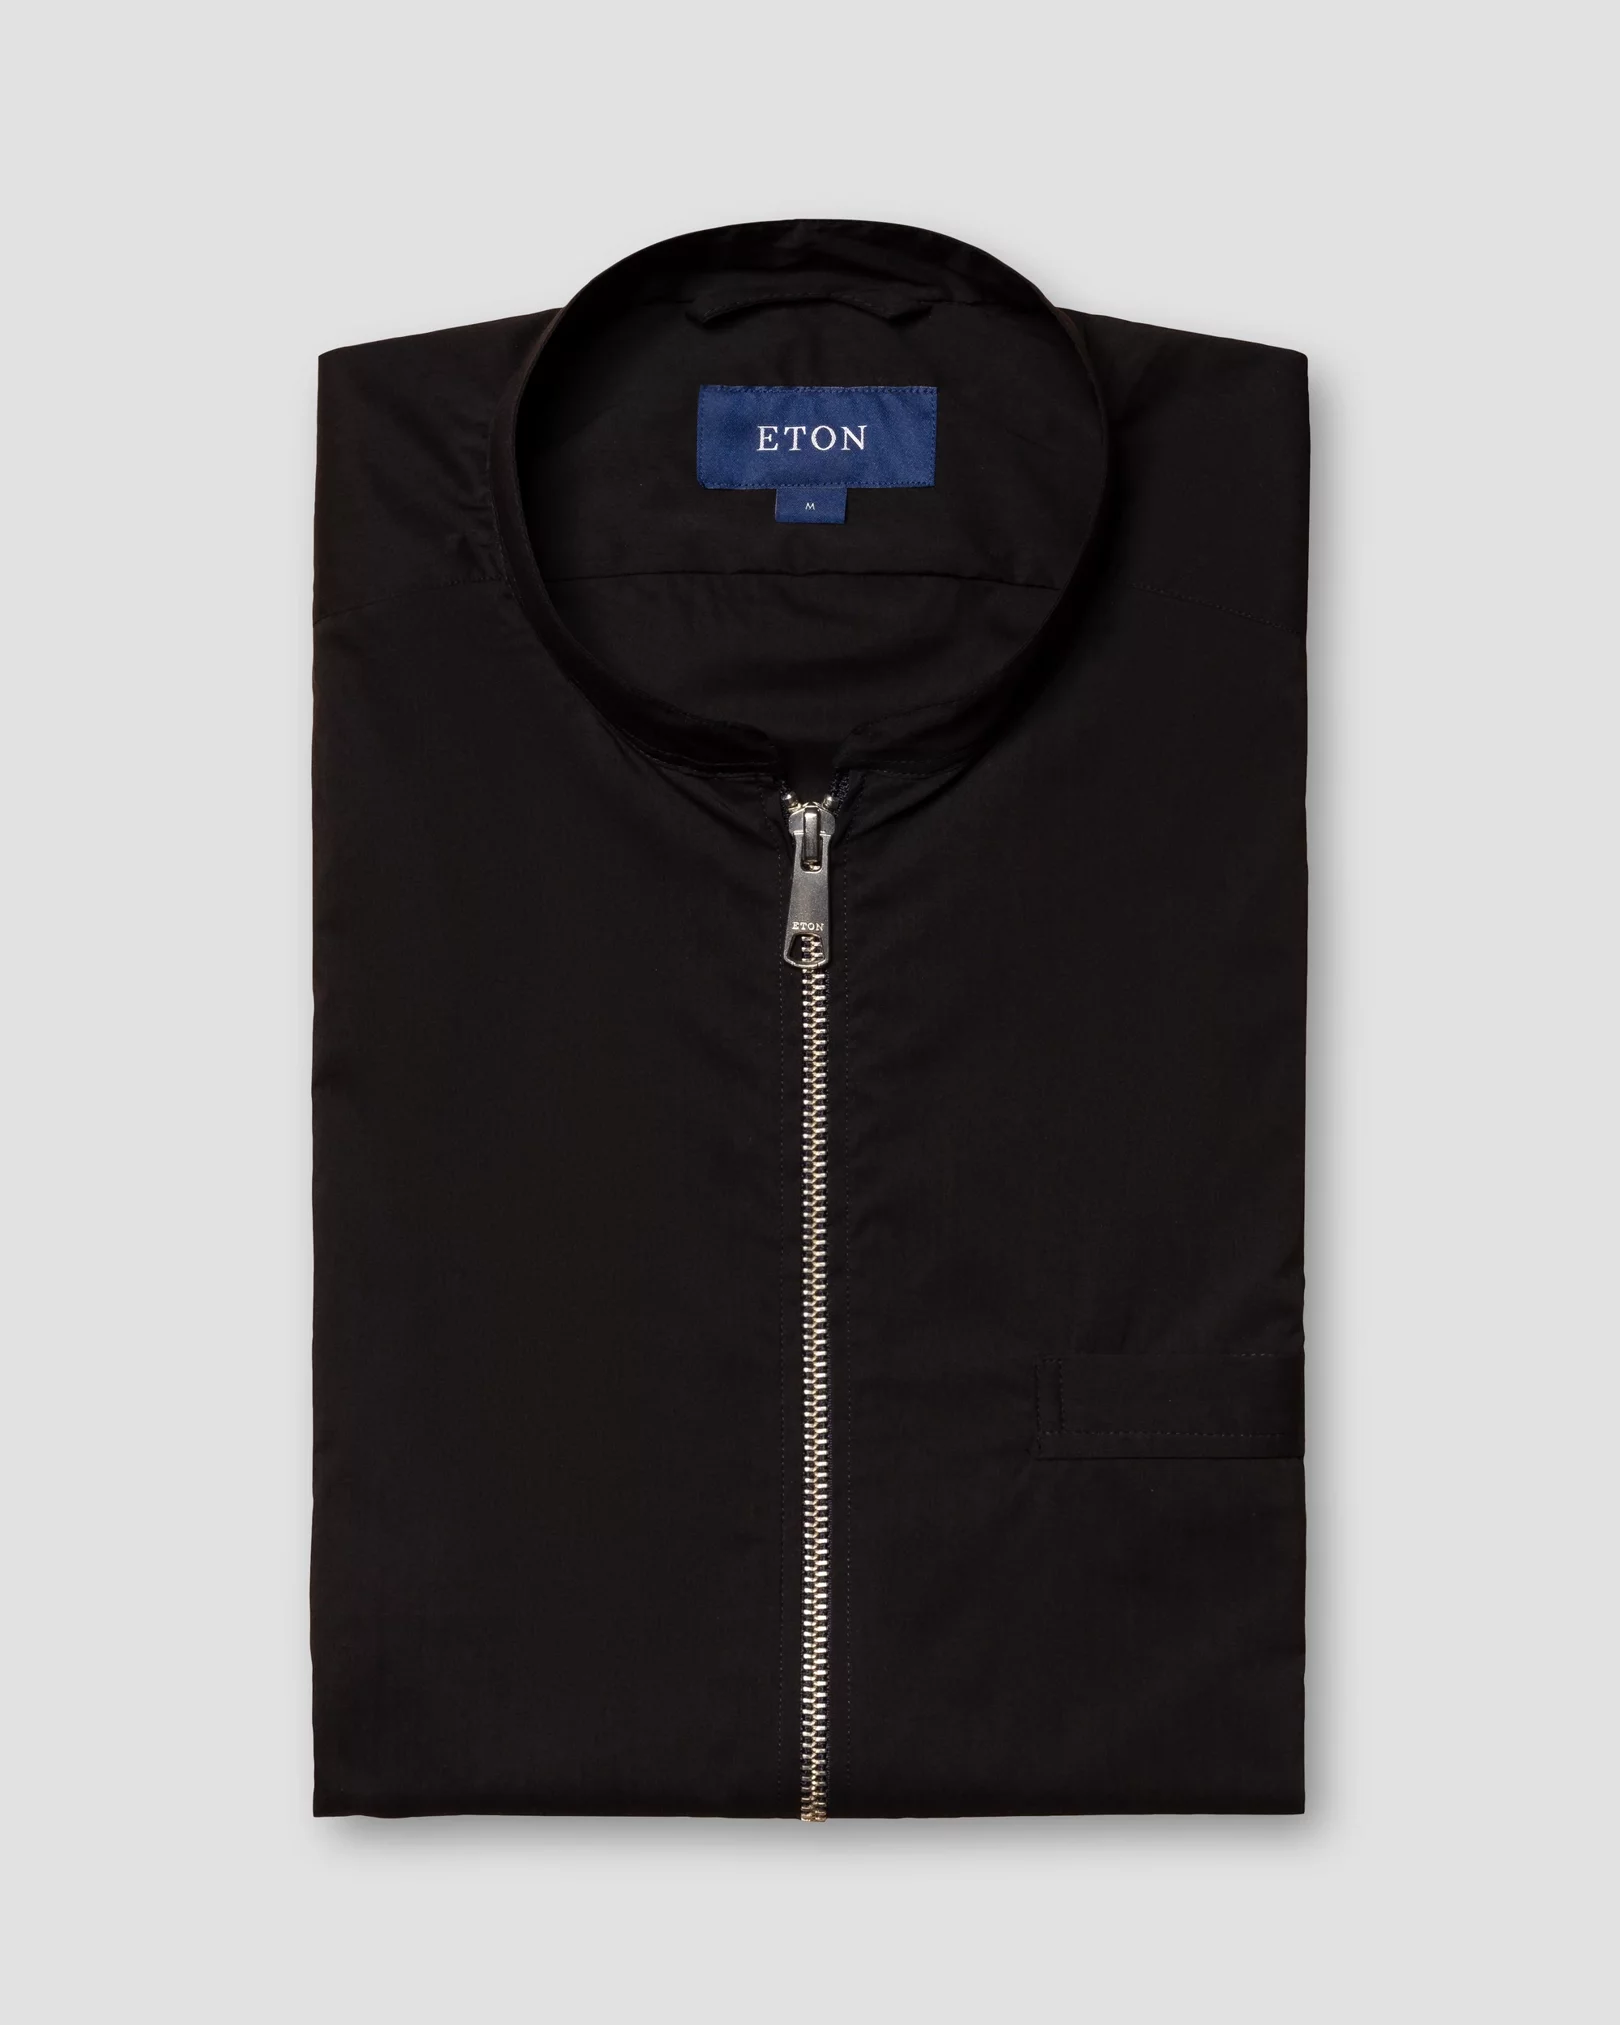 Eton - black wind vest stand collar low sleeve less vest